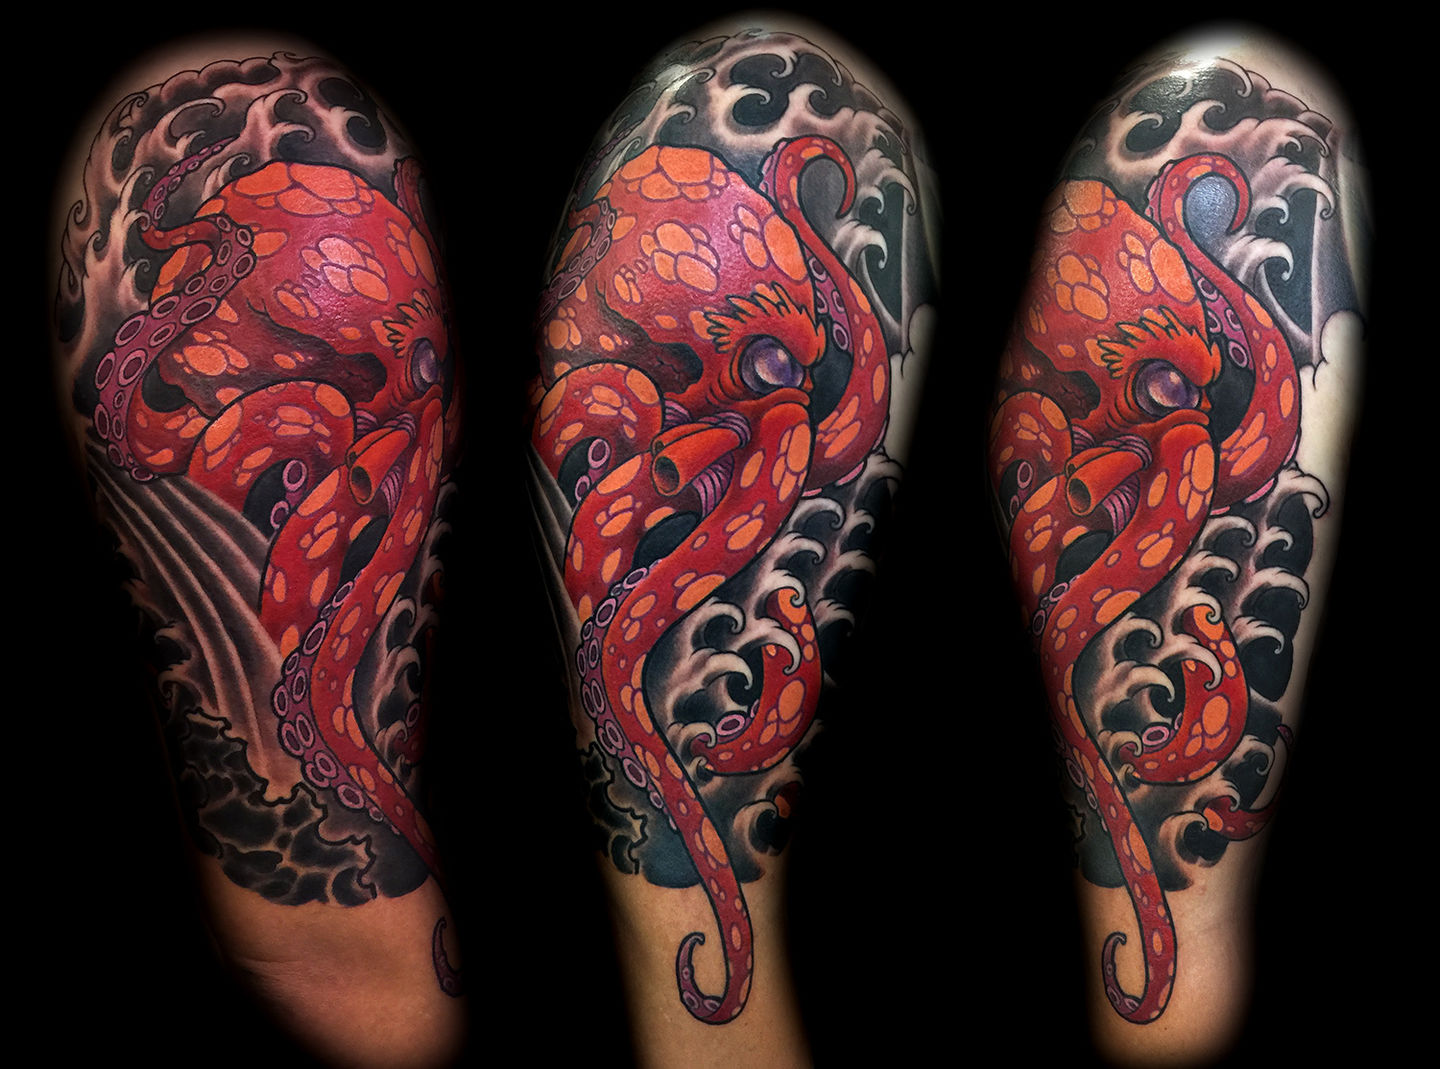 Best-las-vegas-tattoo-artists-shops-joe-riley-inner-visions-tattoo-japanese-octopus-tattoos